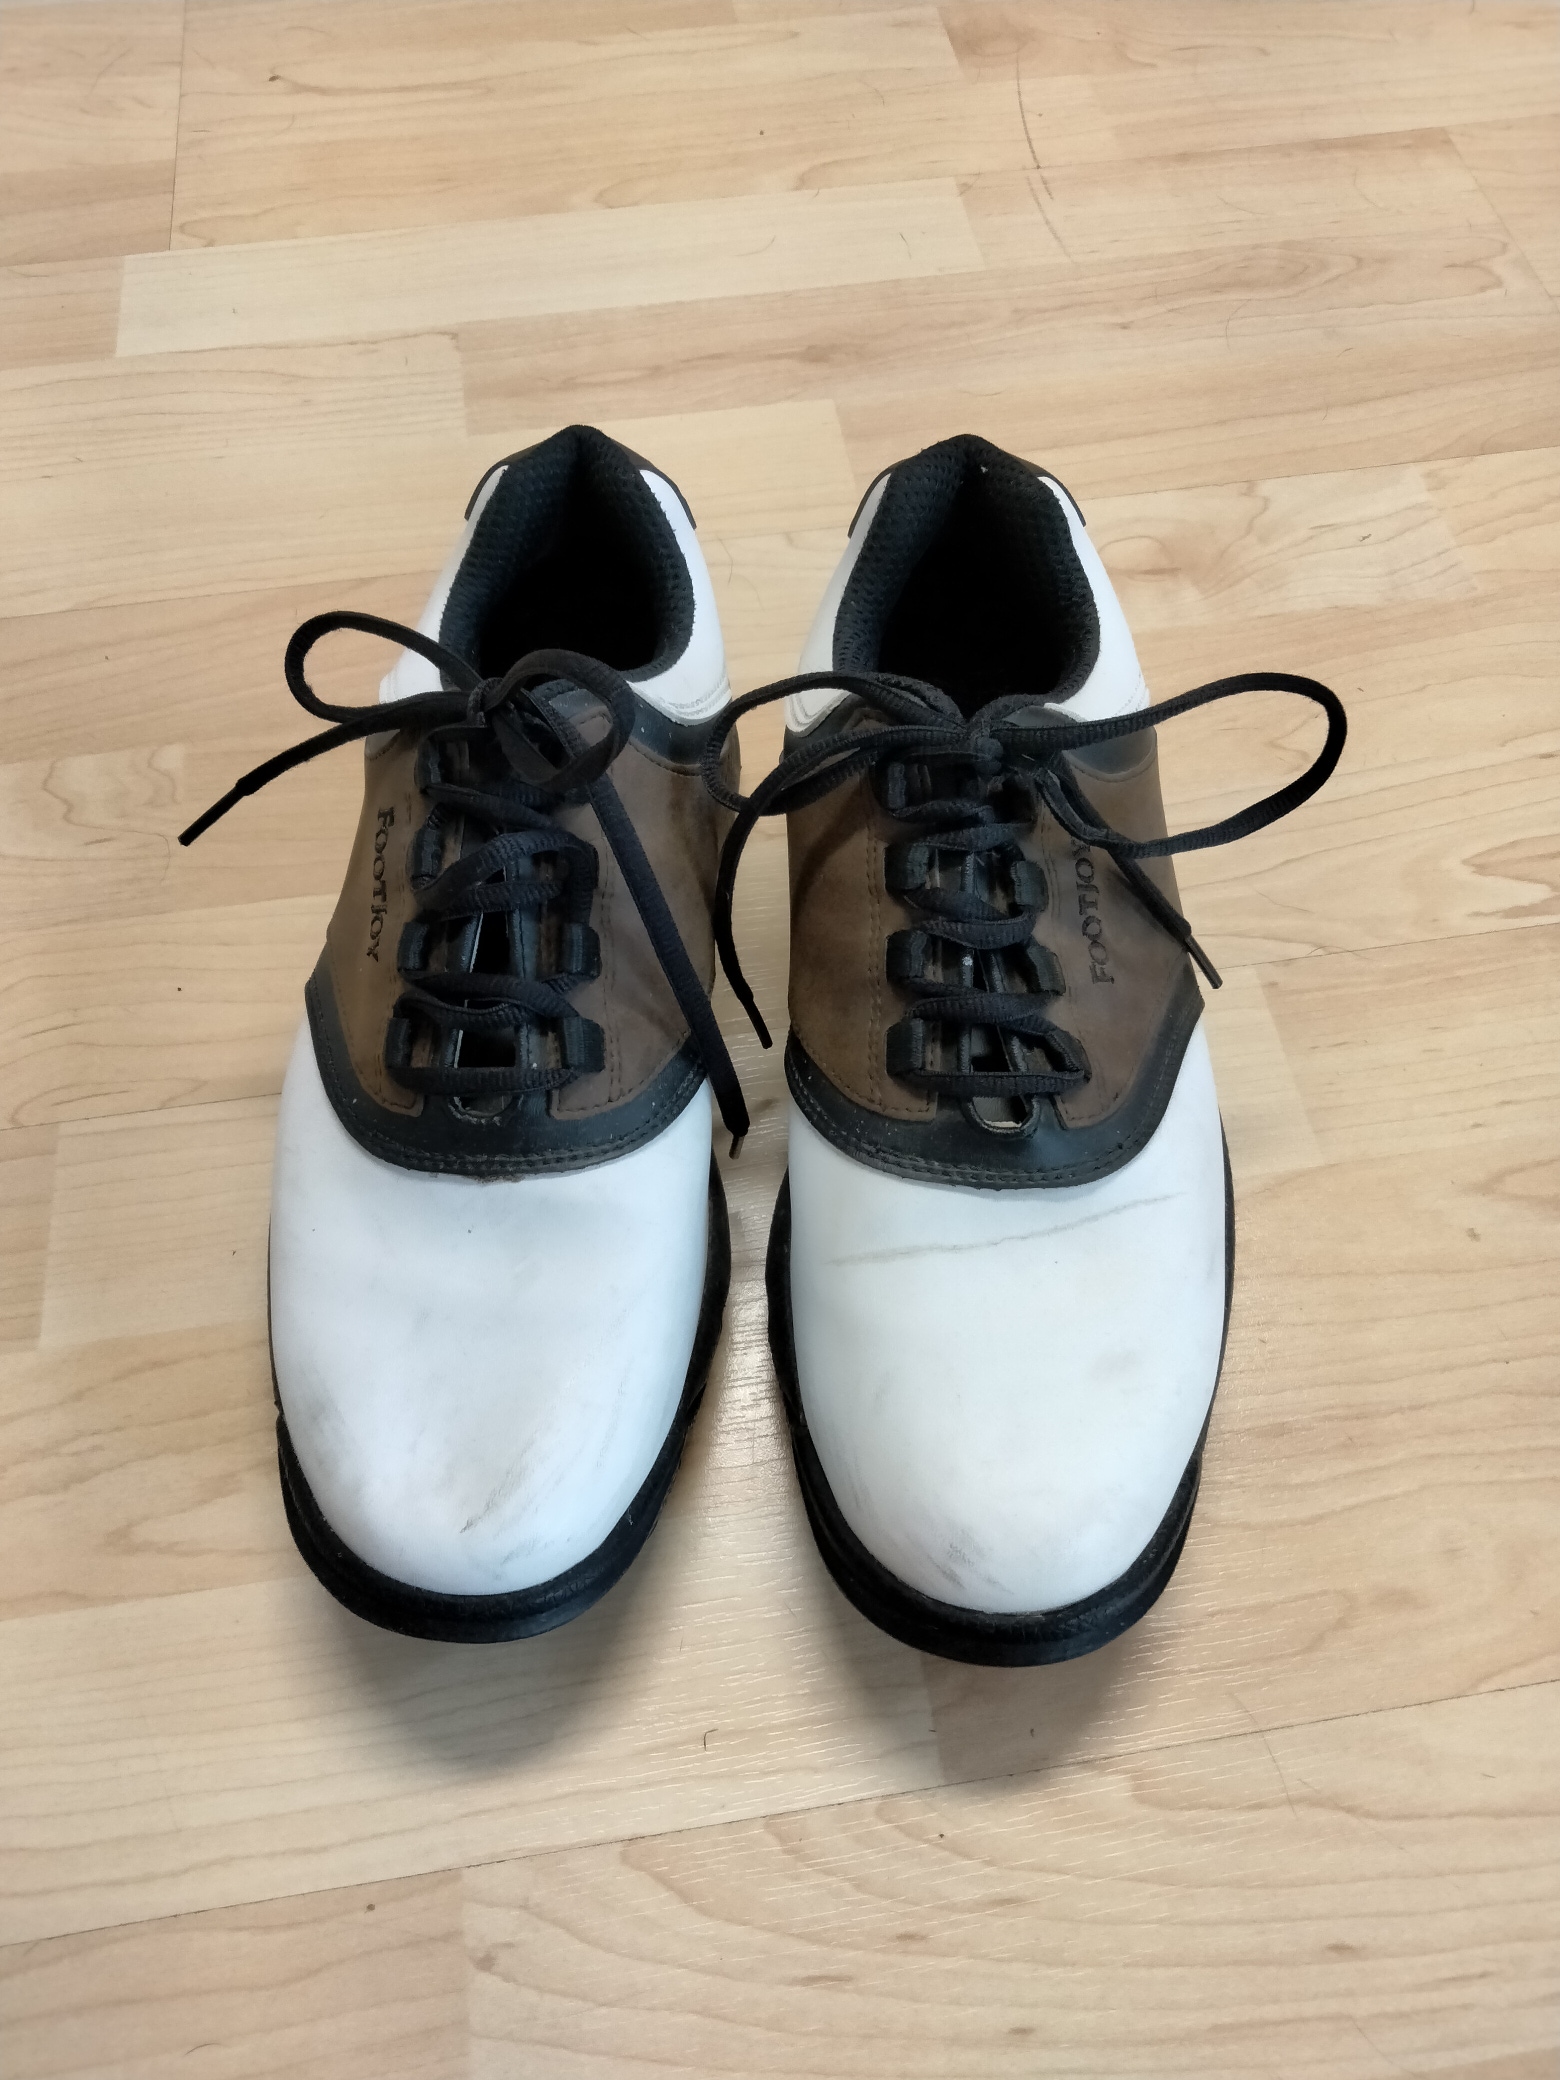 Used Men's Size 9.0 (Women's 10) Footjoy GreenJoys Golf Shoes